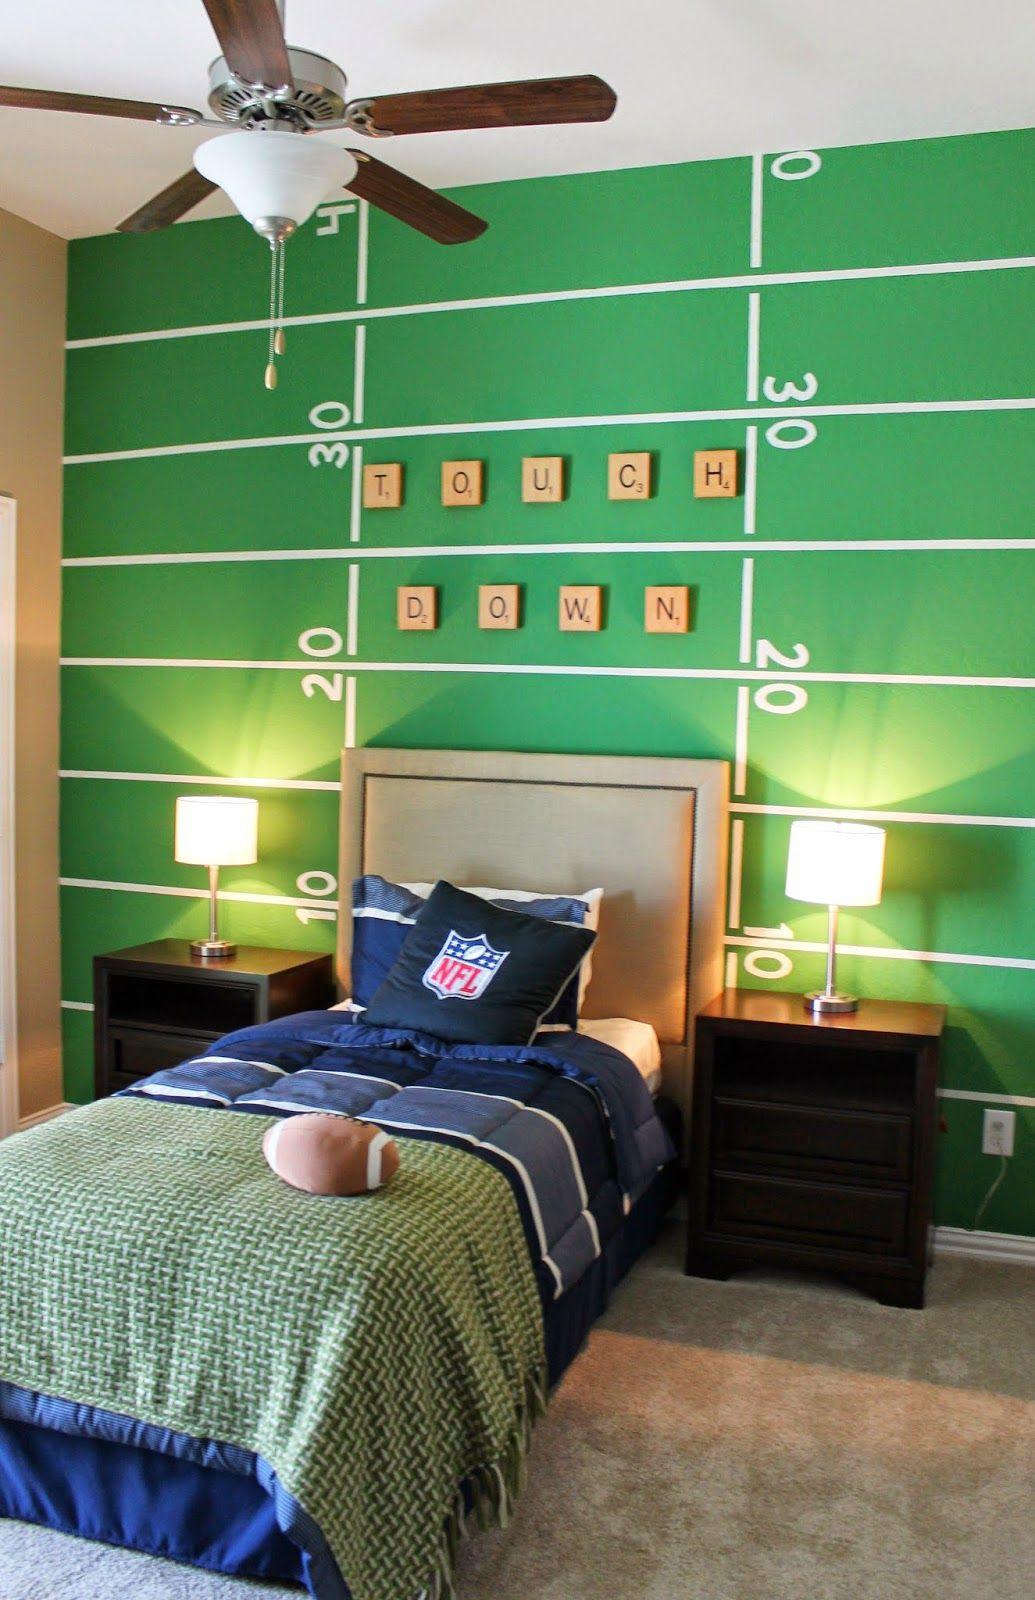 Football Bedroom Decoration
 Football themed boys room Back wall painted to look like